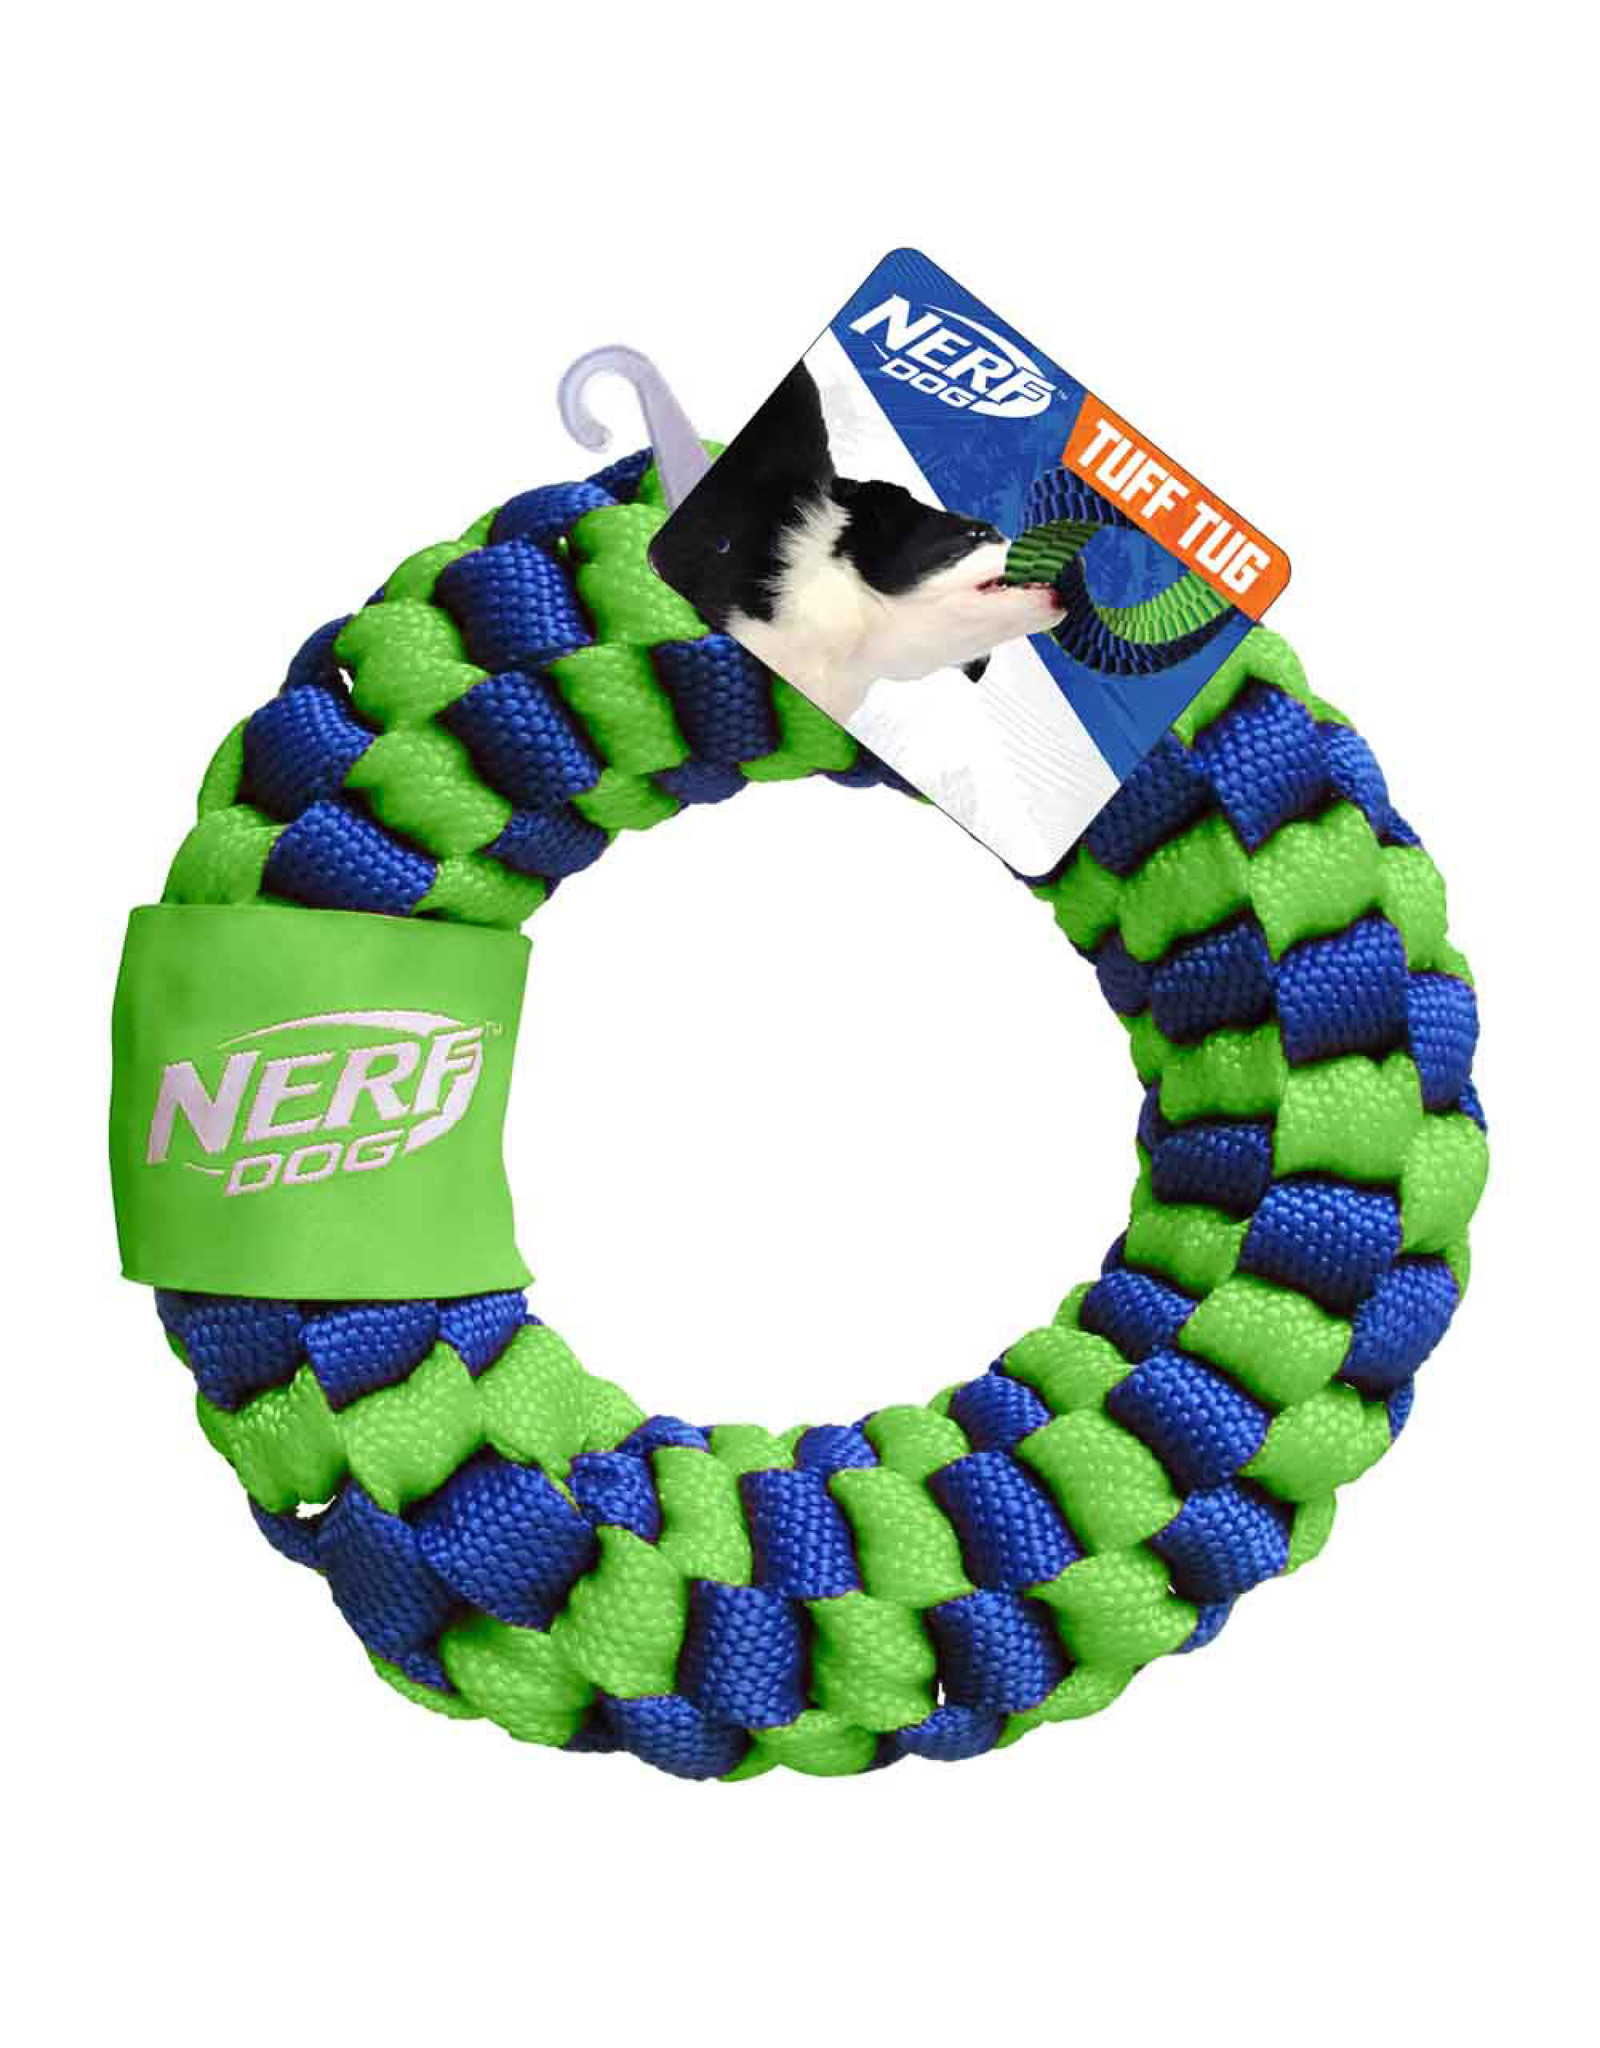 Nerf Nerf Dog Braided Twisted Ring Tug 15cm (6in)